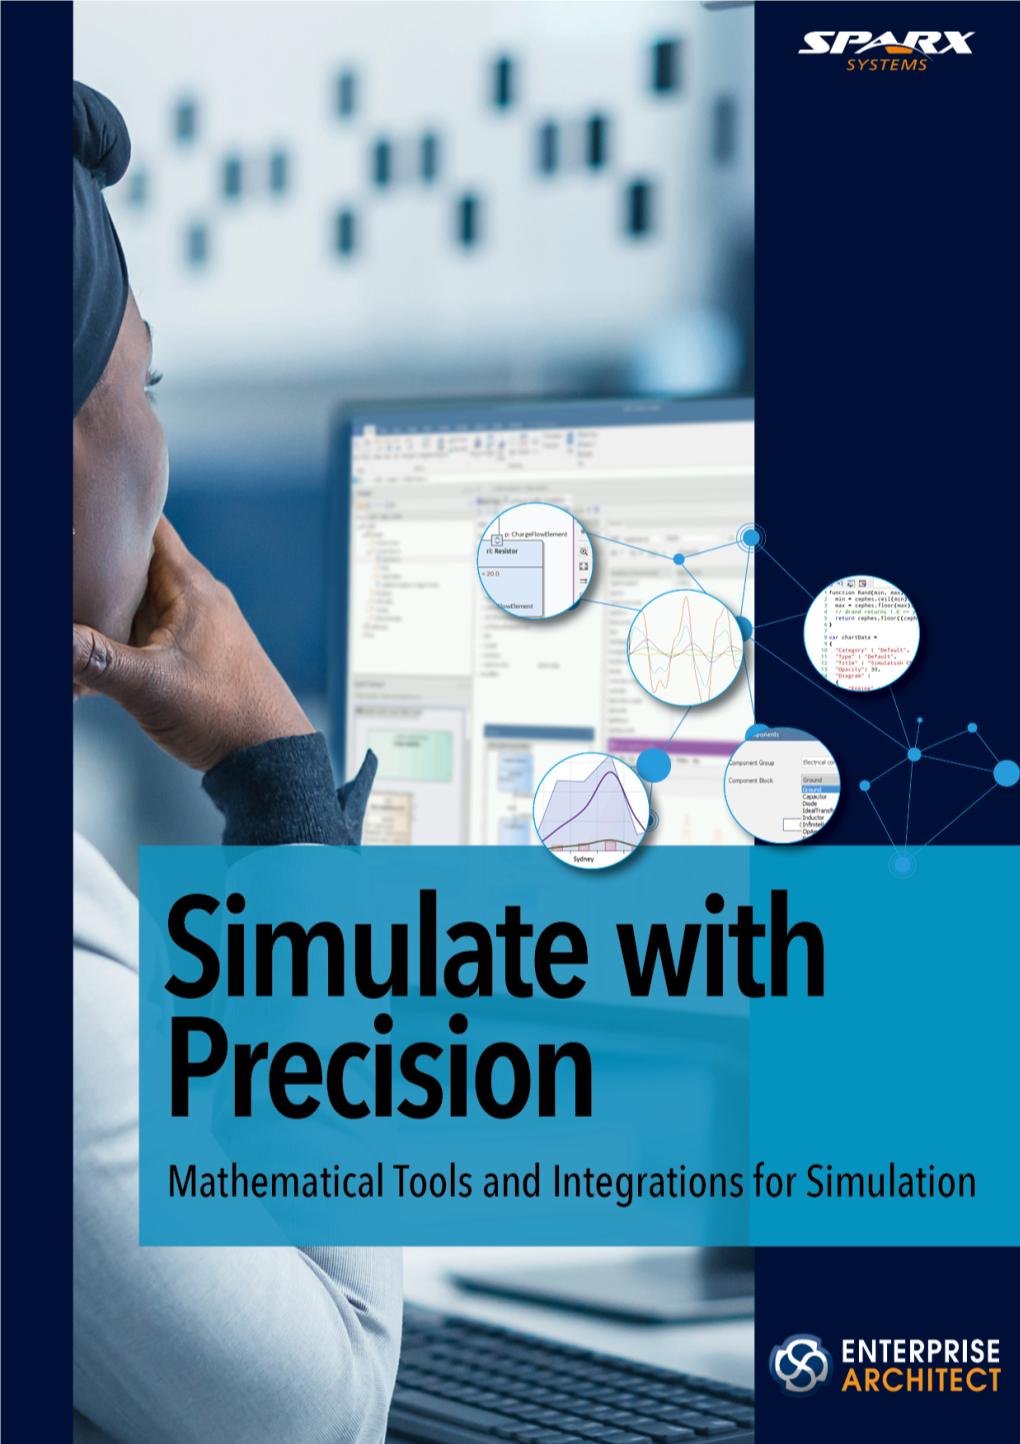 Mathematical Model Simulation - Mathematical Simulations 7 September, 2020